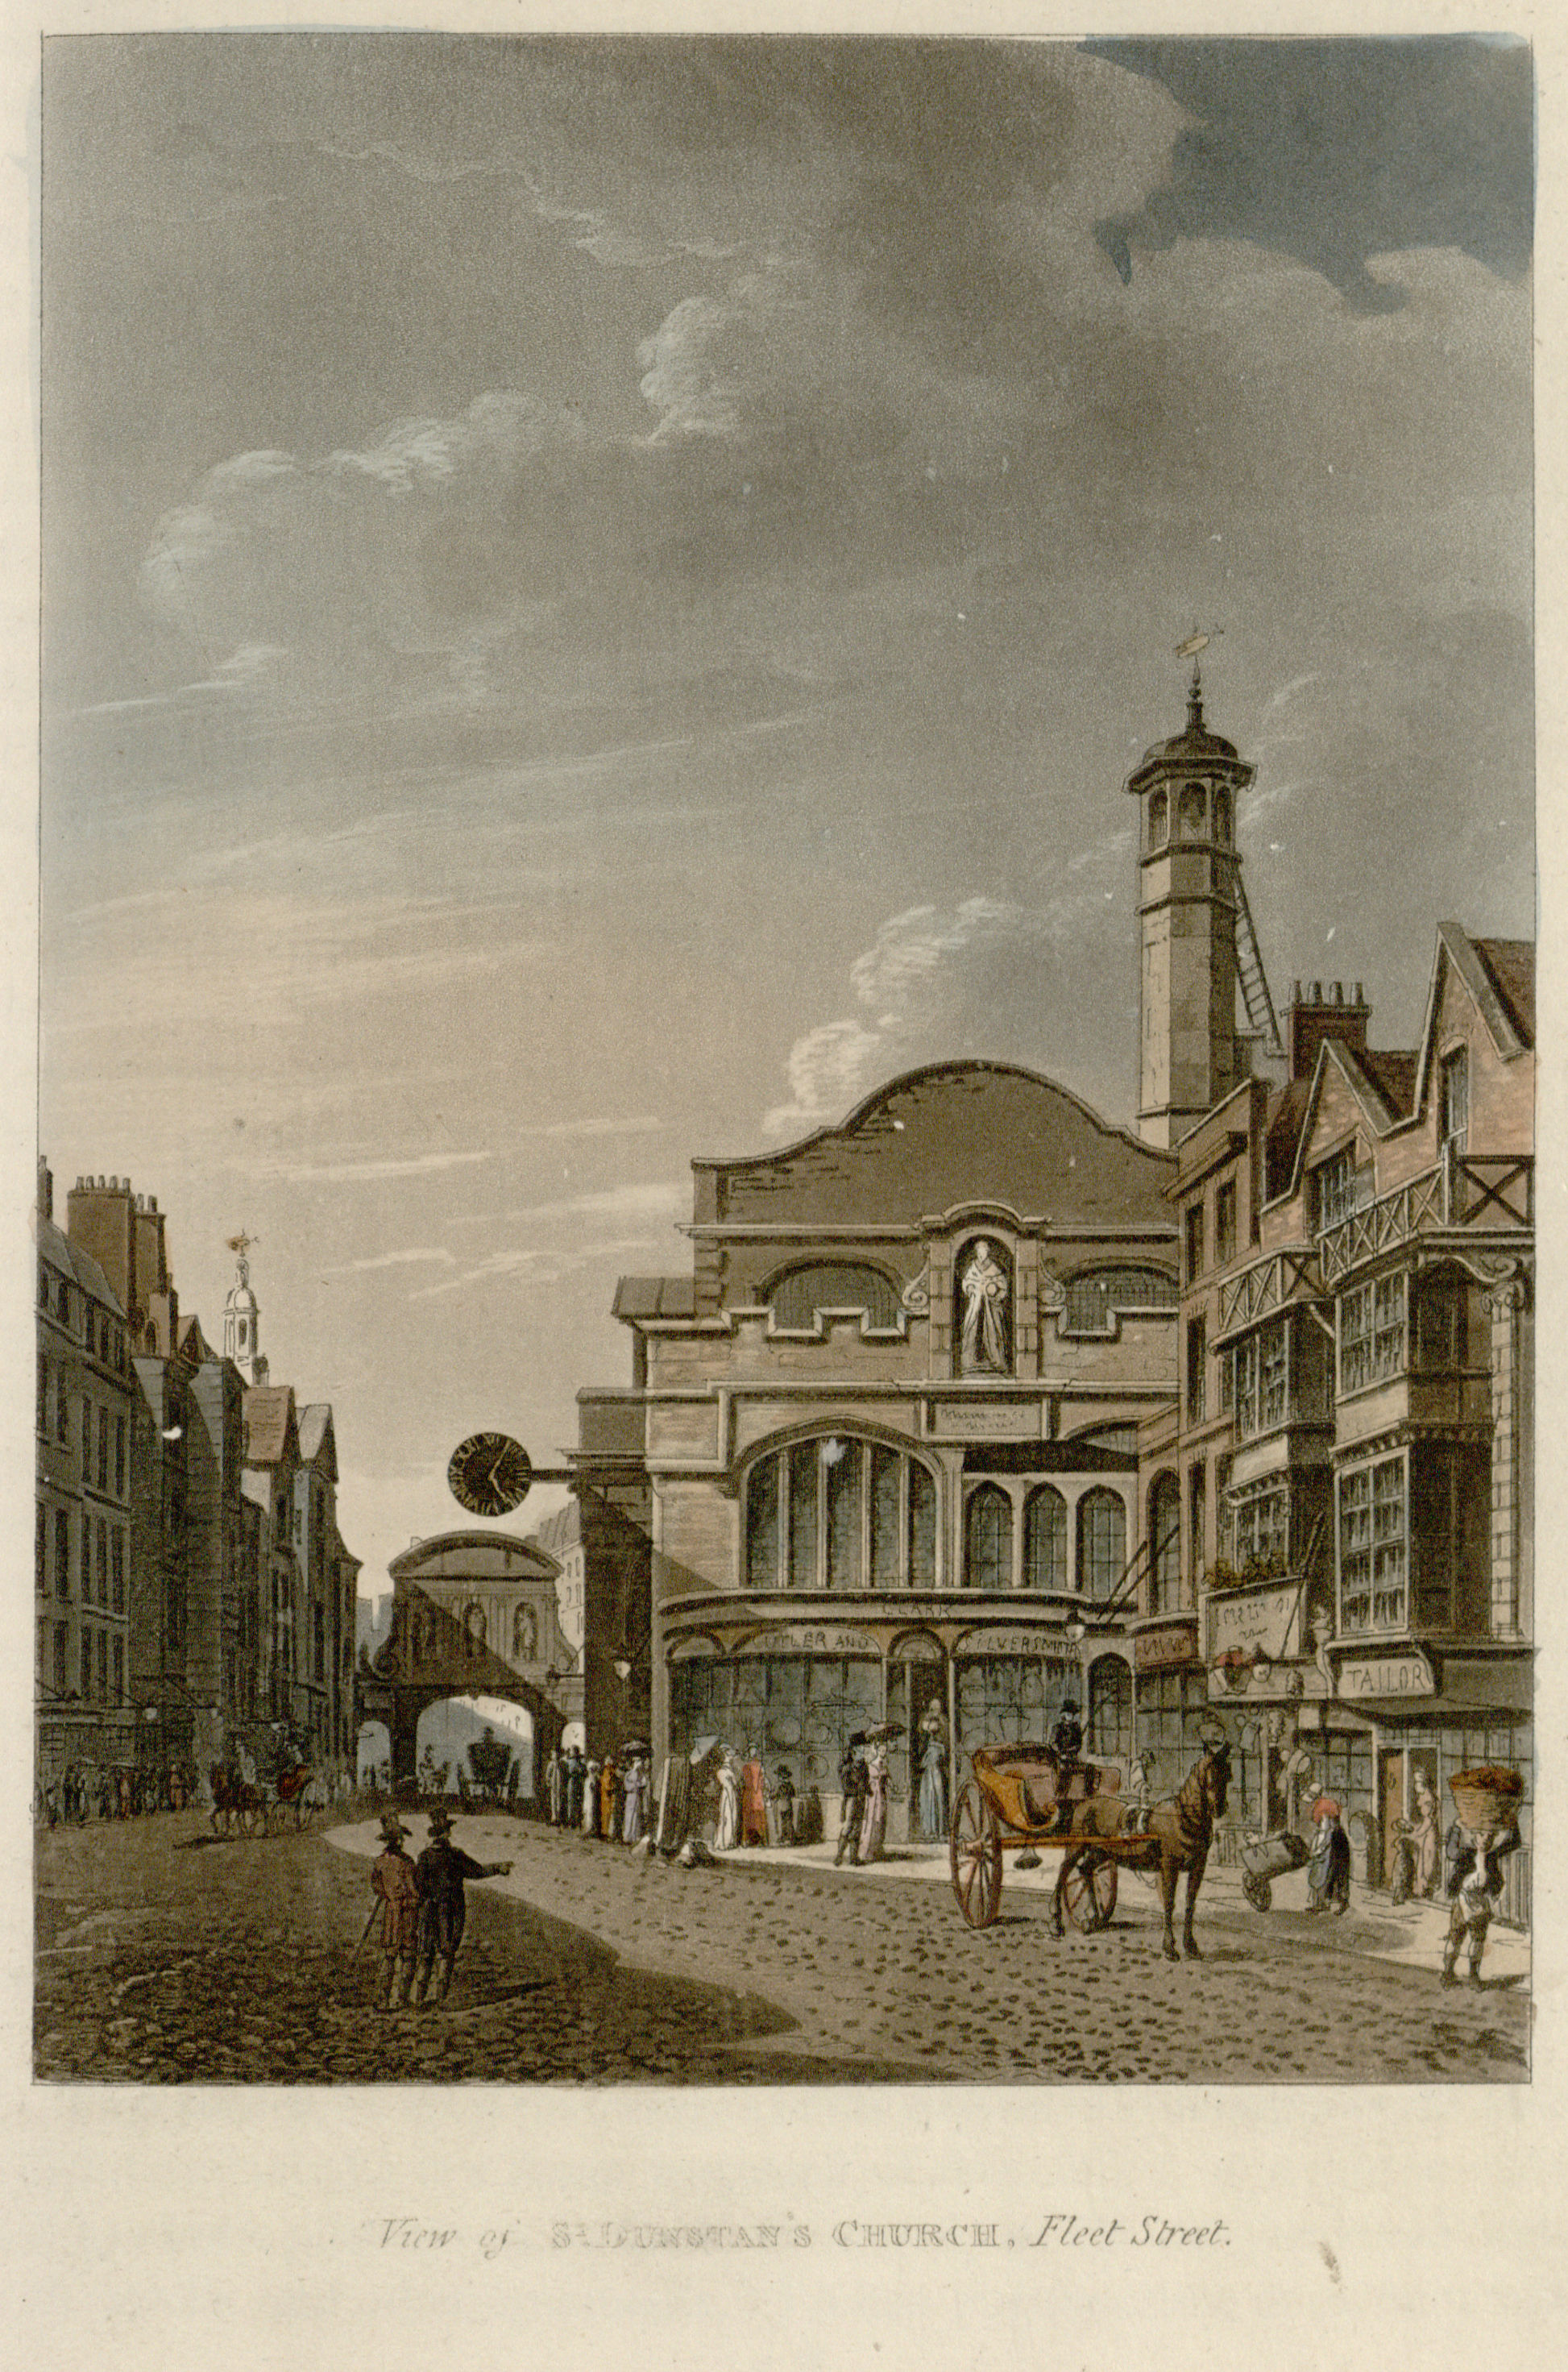 61 - Papworth - View of St Dunstan's Church, Fleet Street